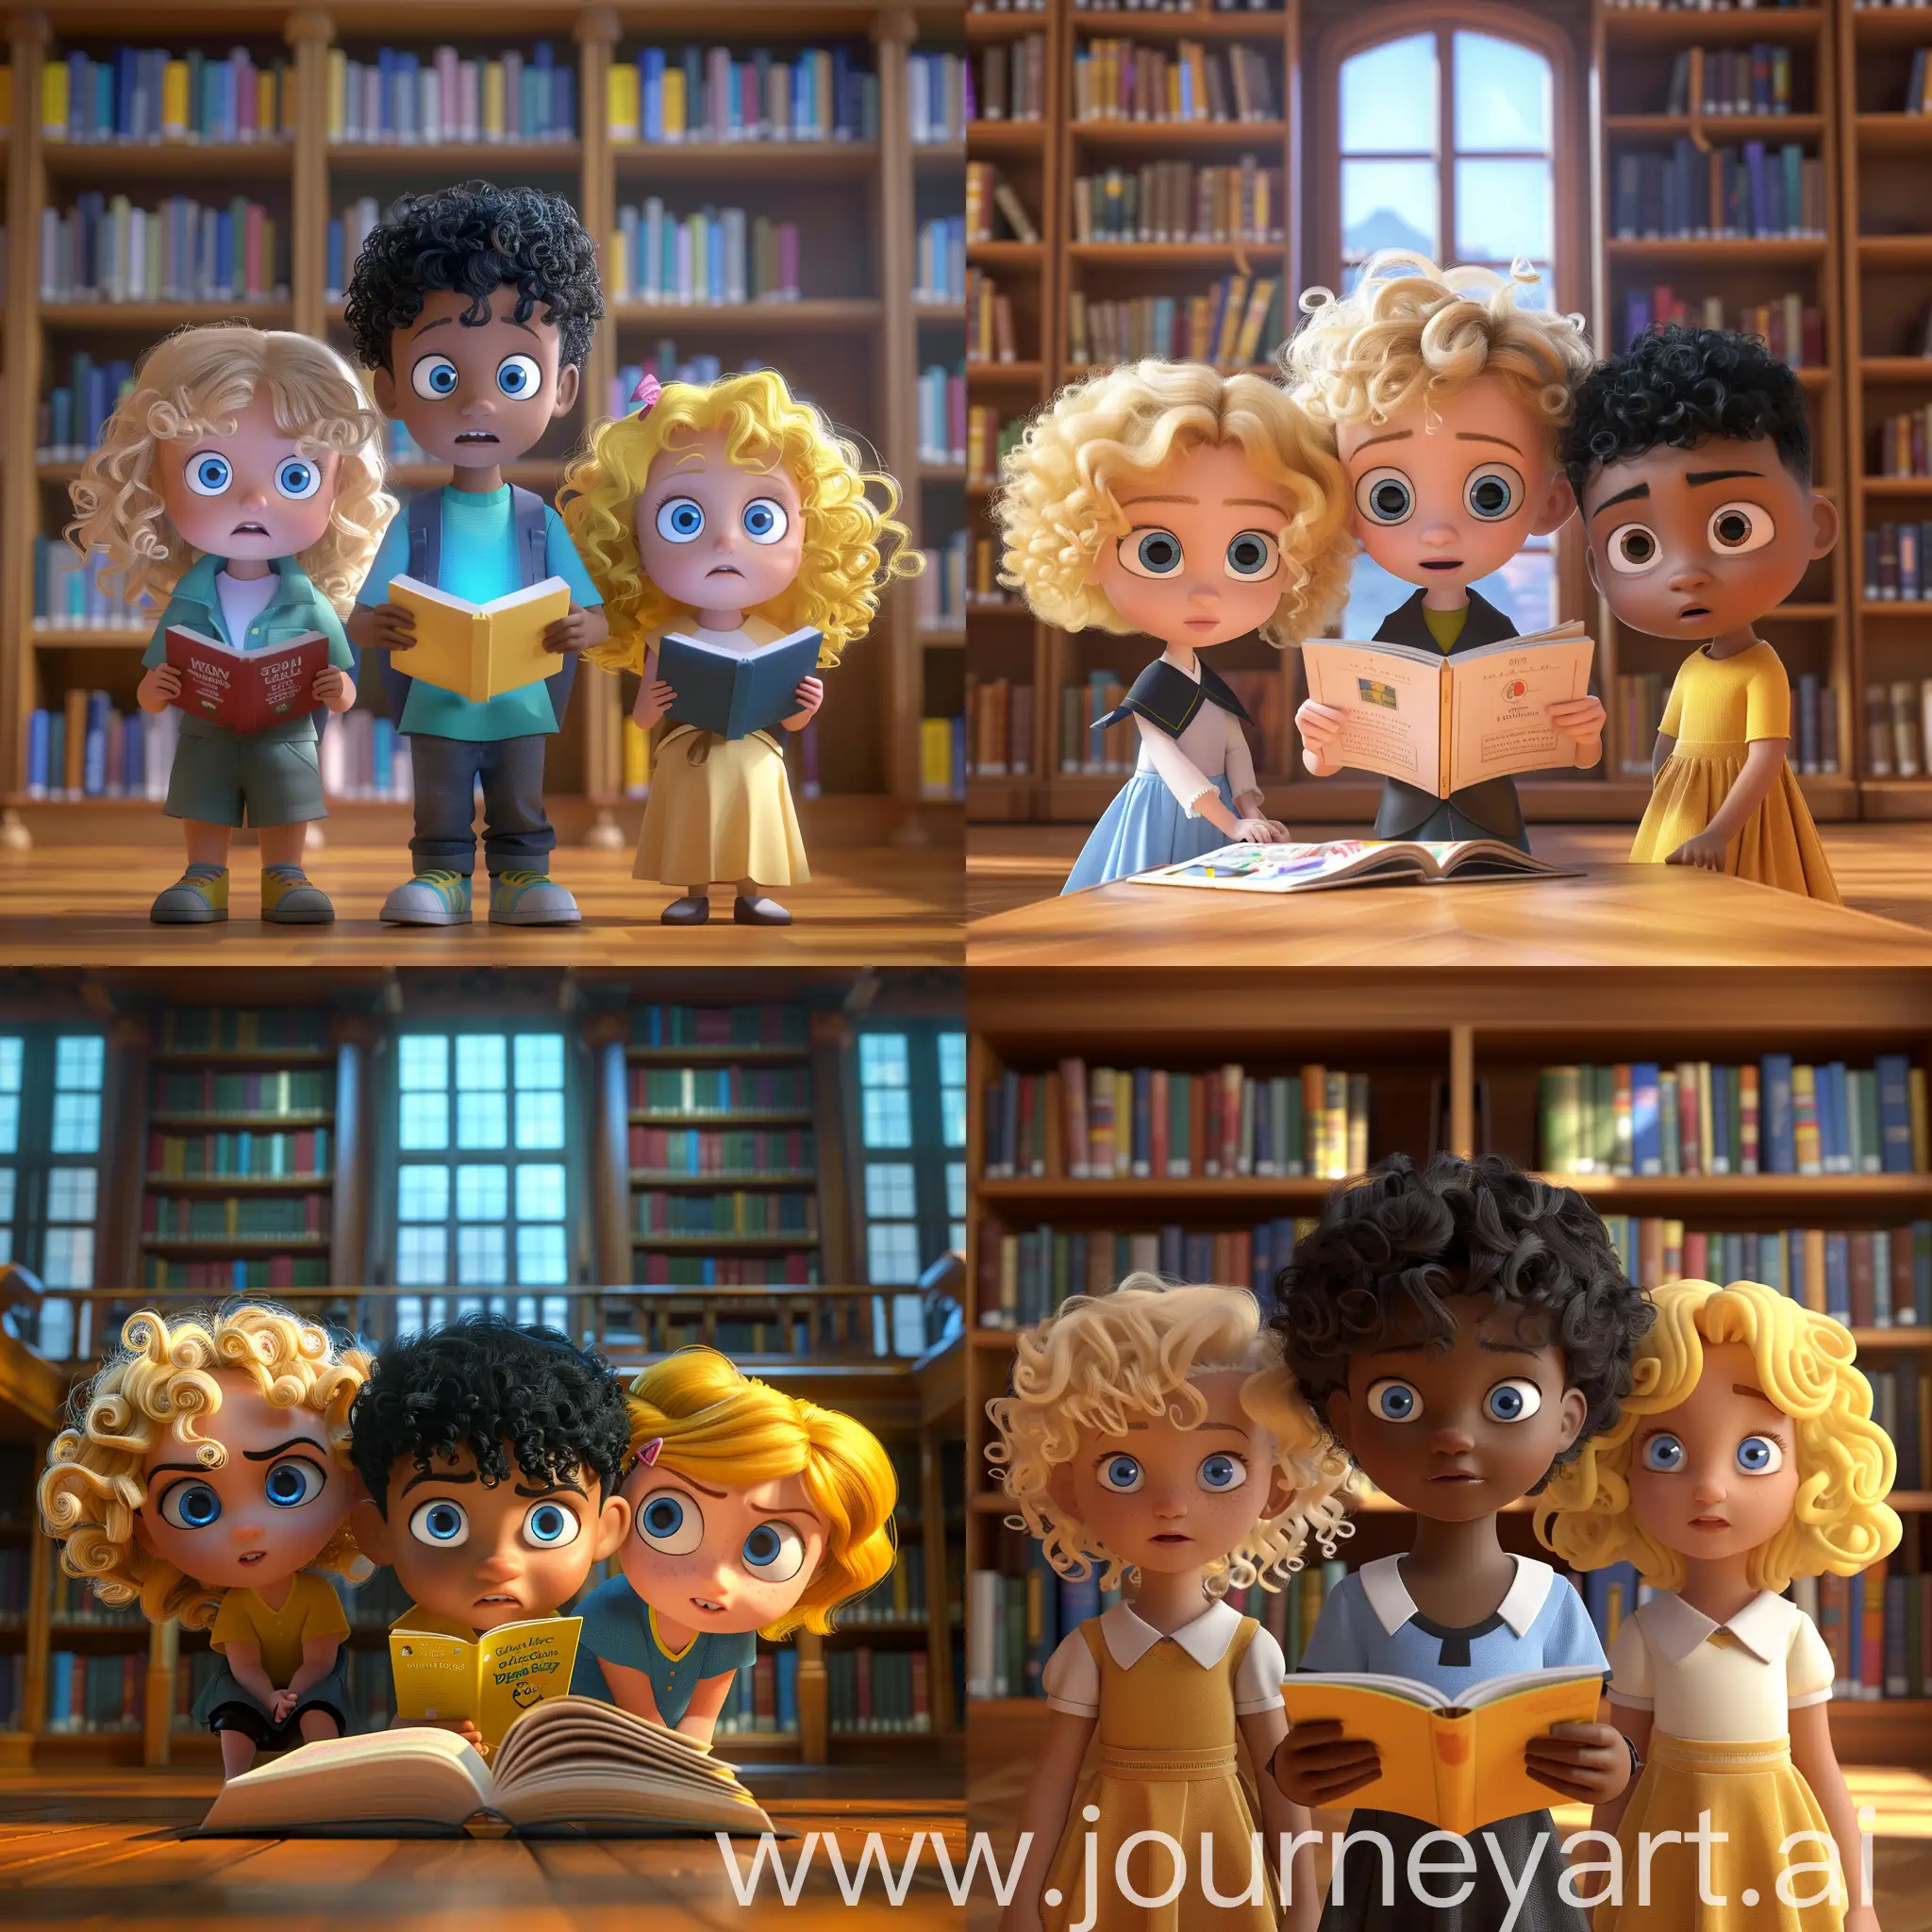 SixYearOld-Children-Reading-in-Library-Heartwarming-Pixar-Style-Scene